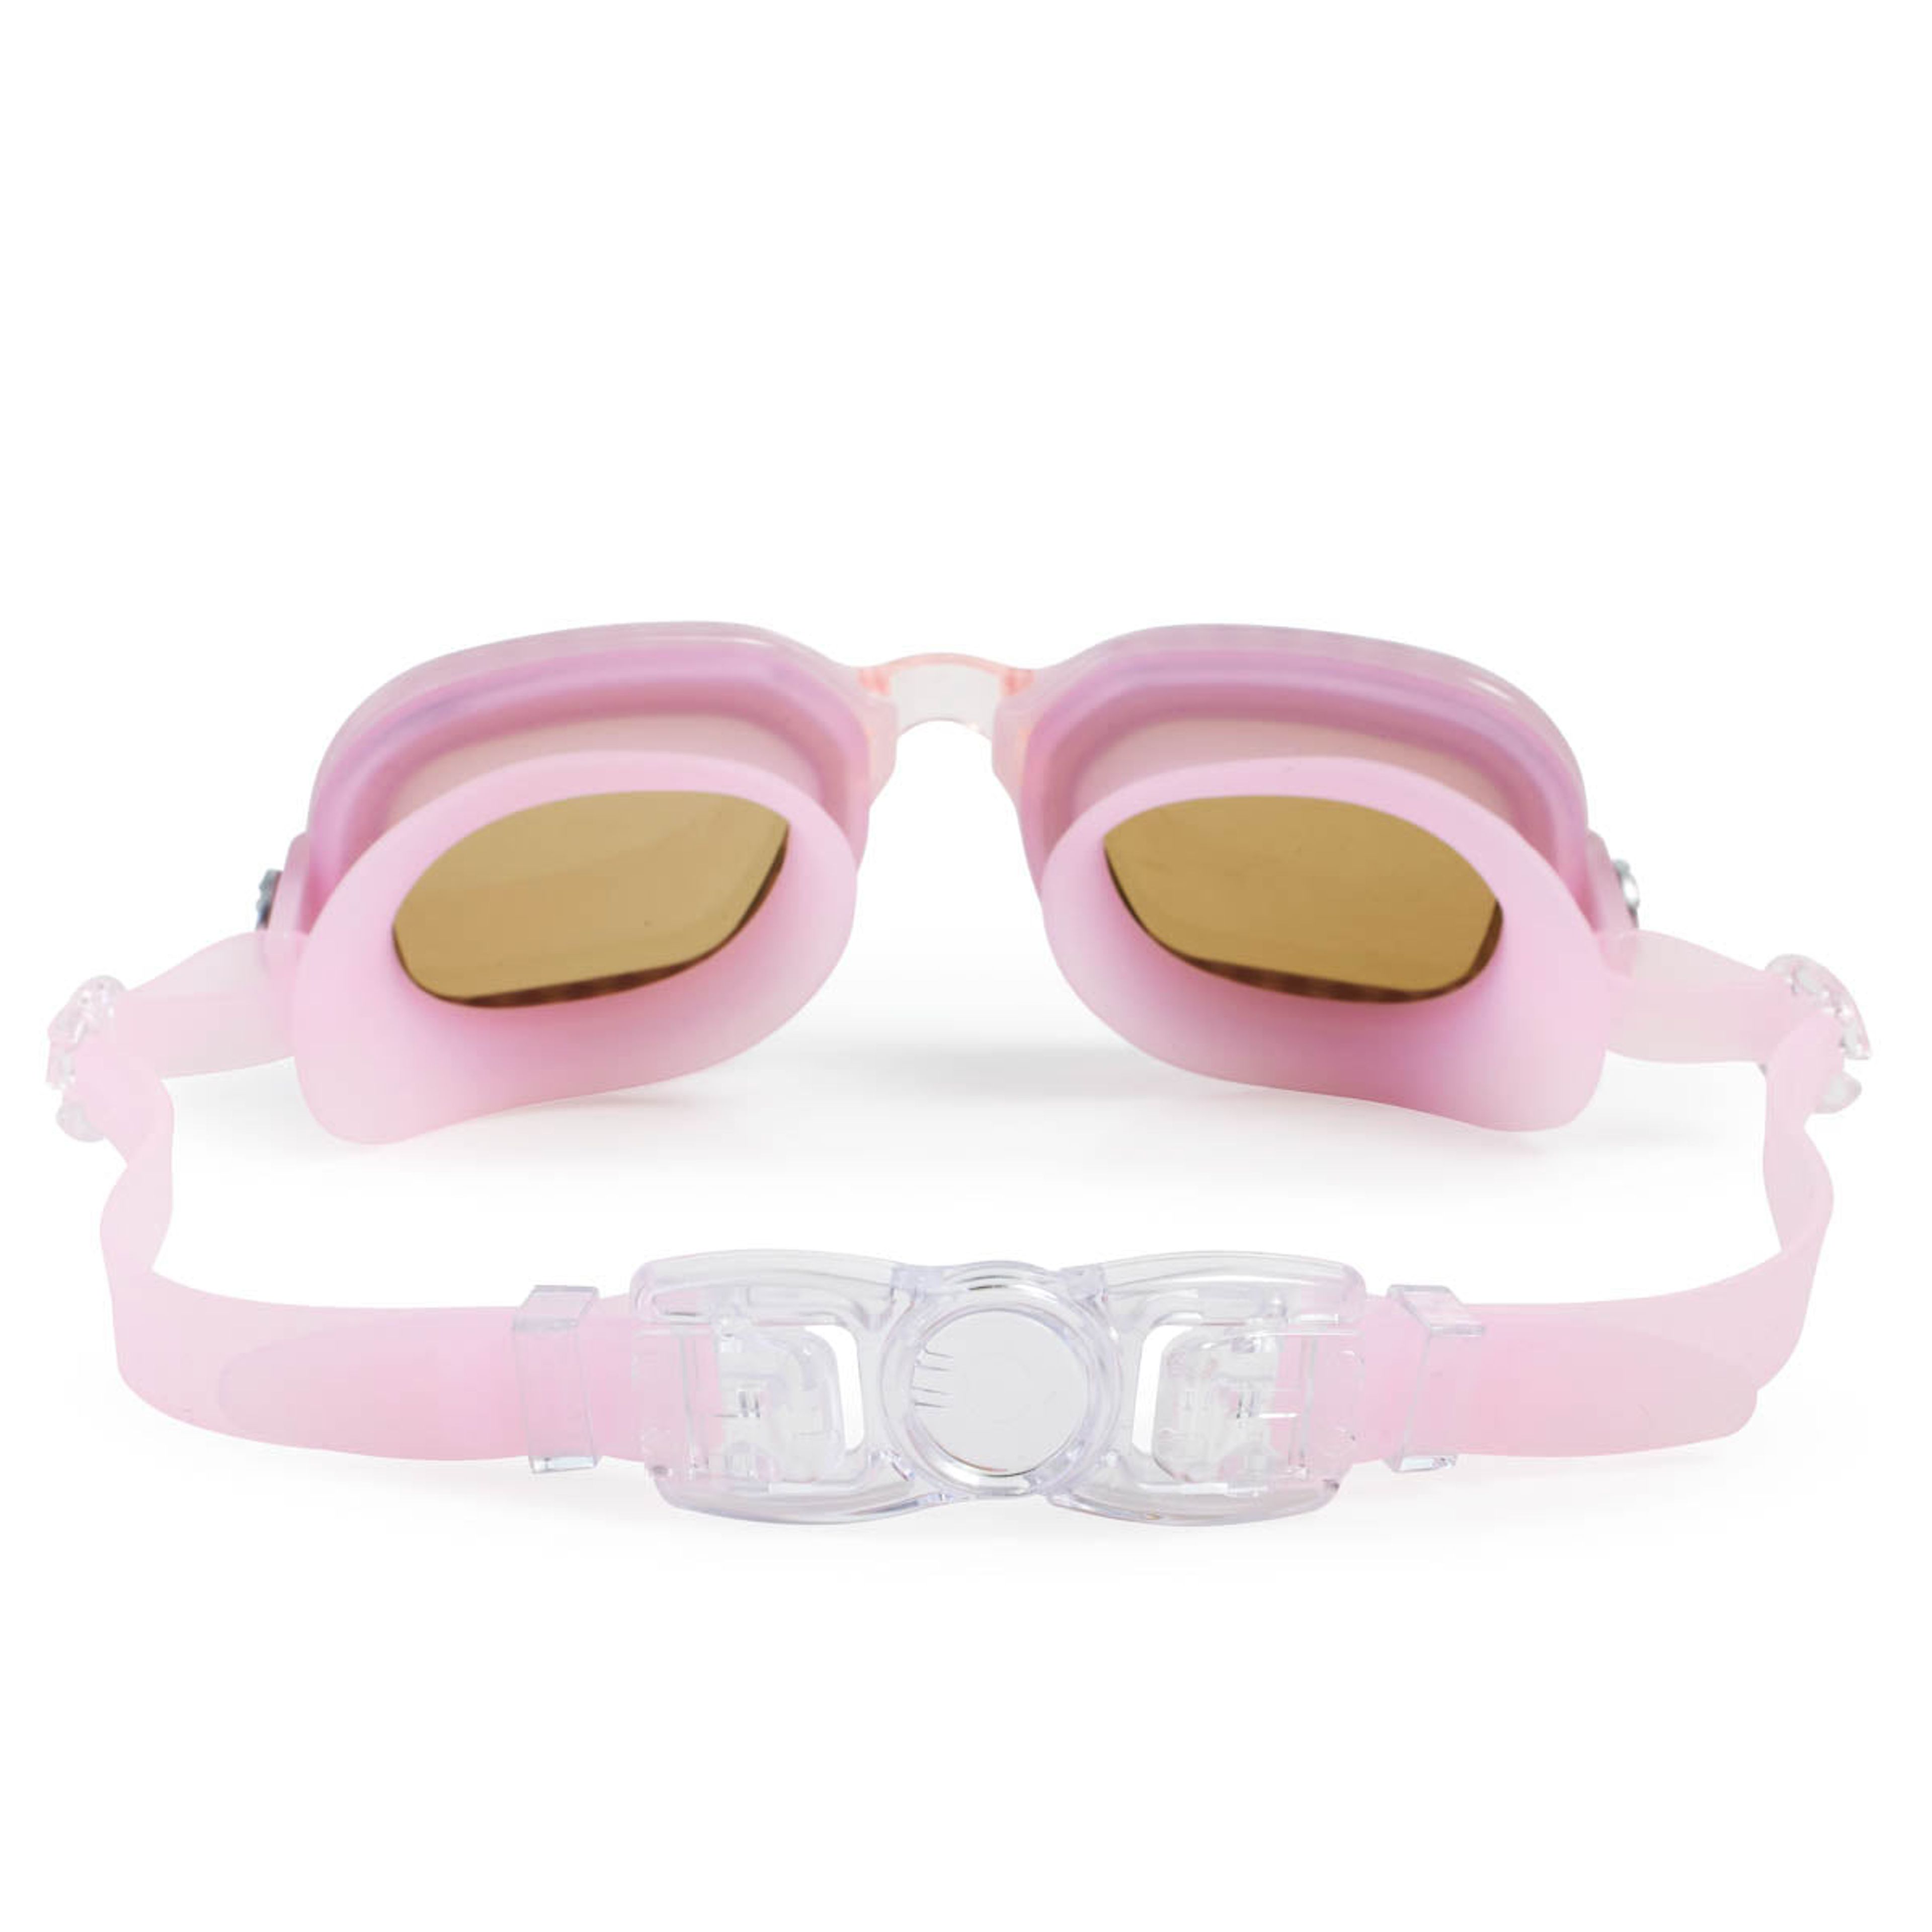 Rose Quartz Bring Vibrancy Adult Swim Goggles